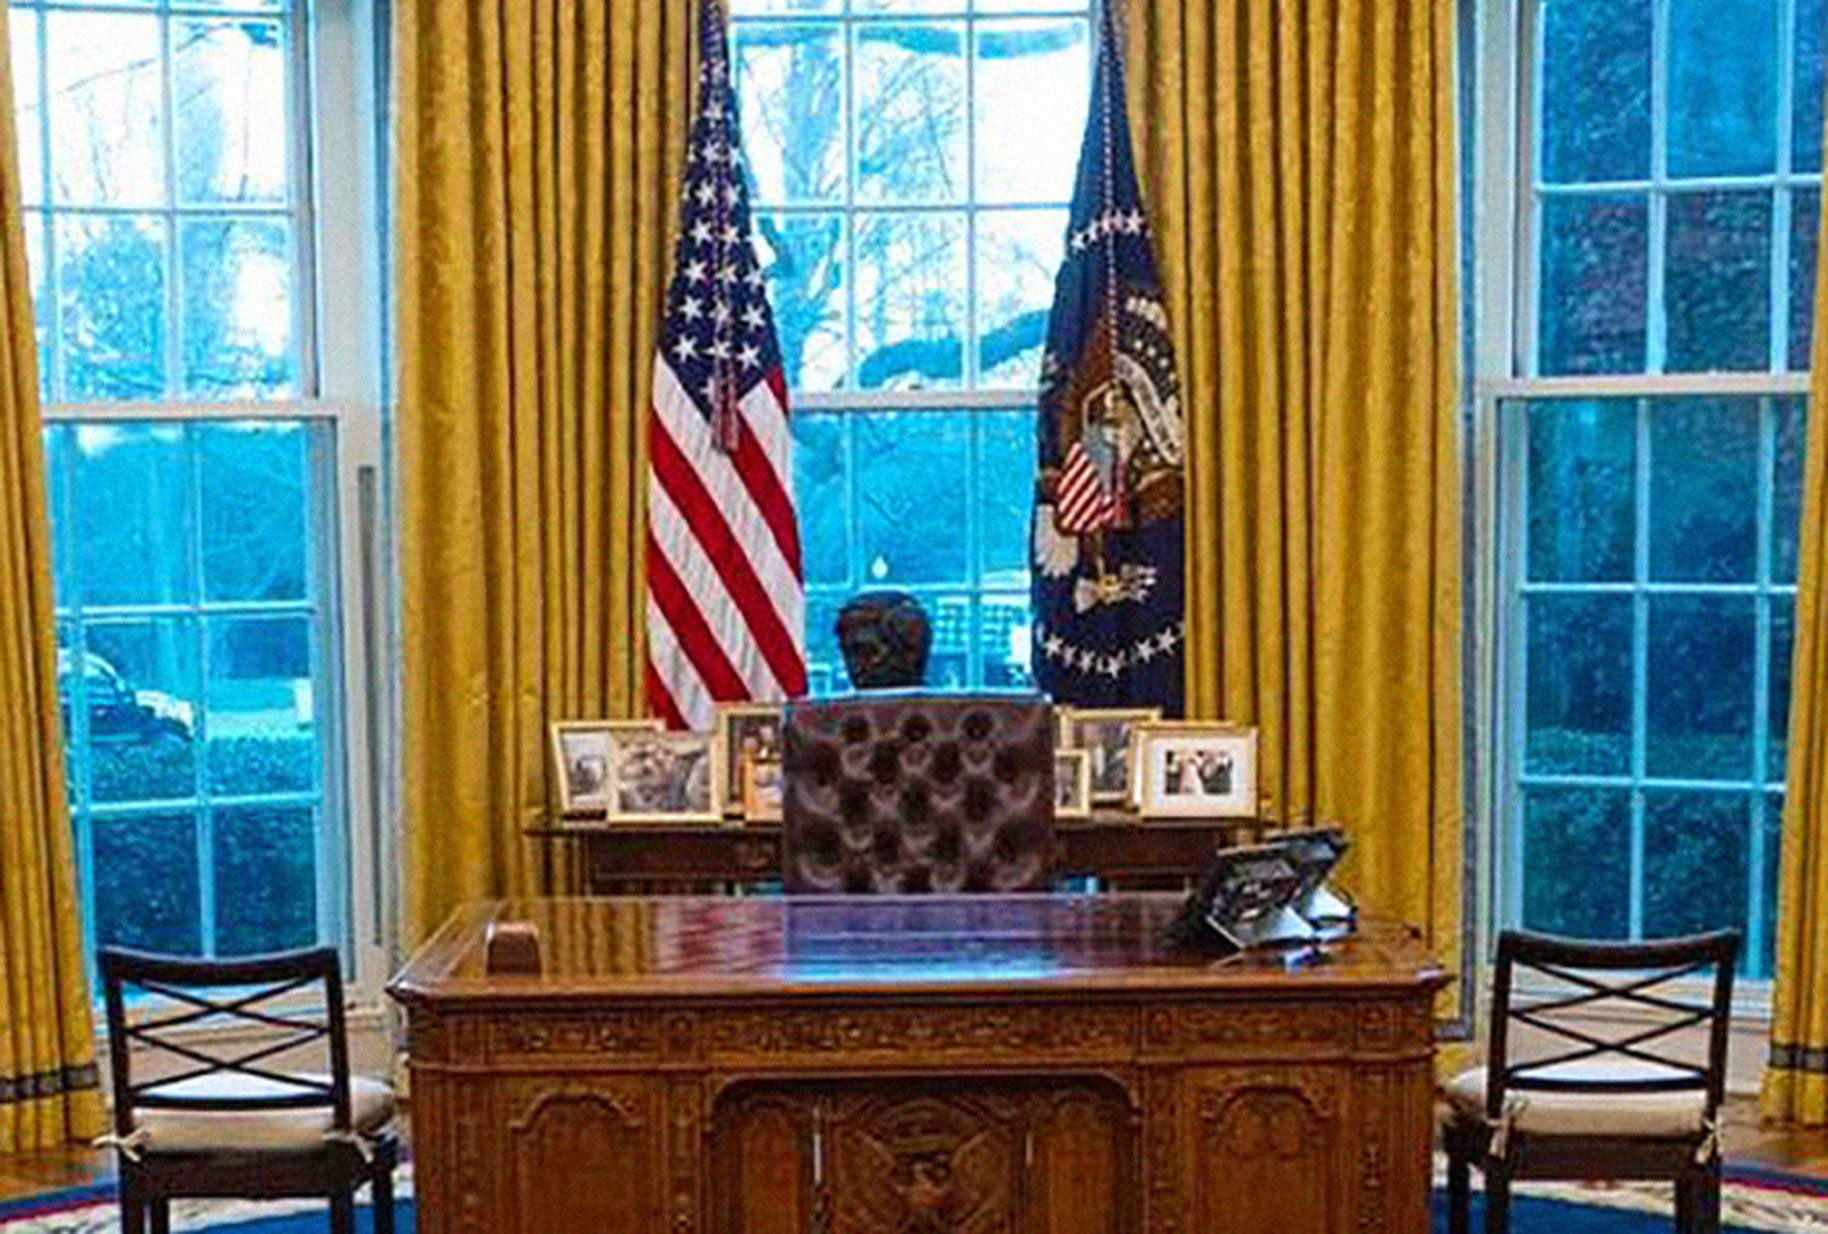 Kantor Trump vs Biden Oval